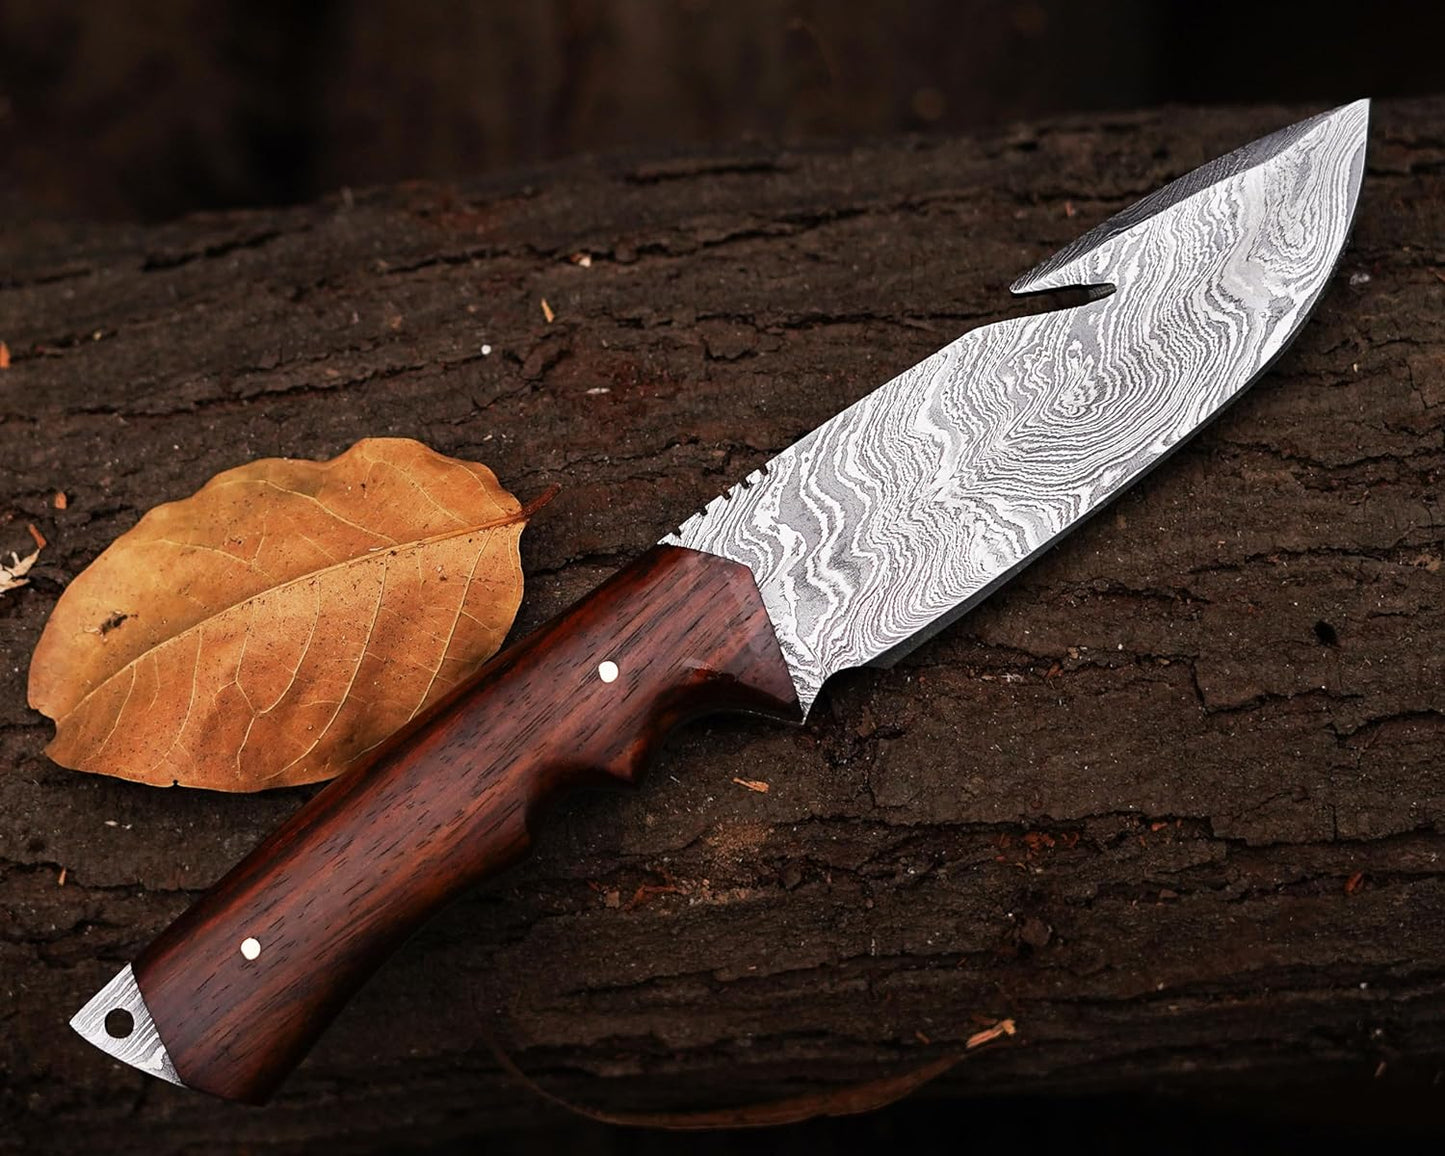 KD Handmade Hunting Knife Damascus Steel Knife with Leather Sheath